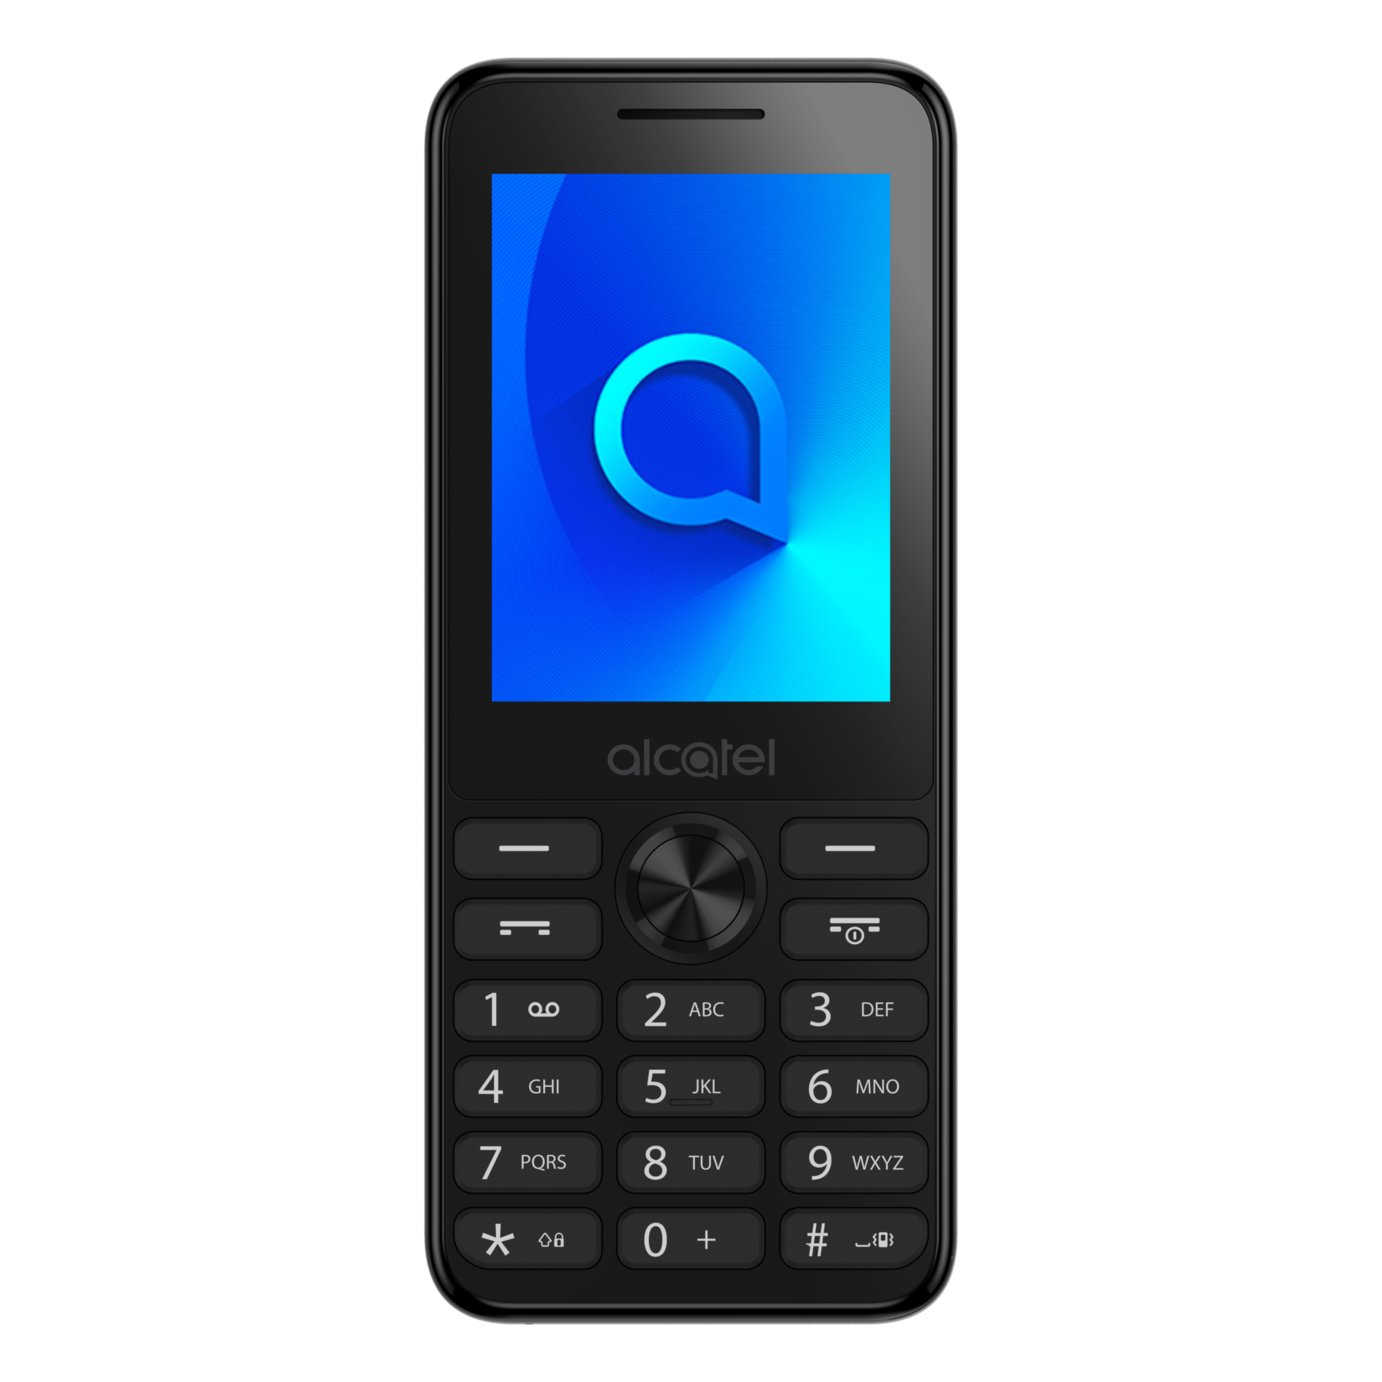 Vodafone Alcatel 20.03 Mobile Phone Review